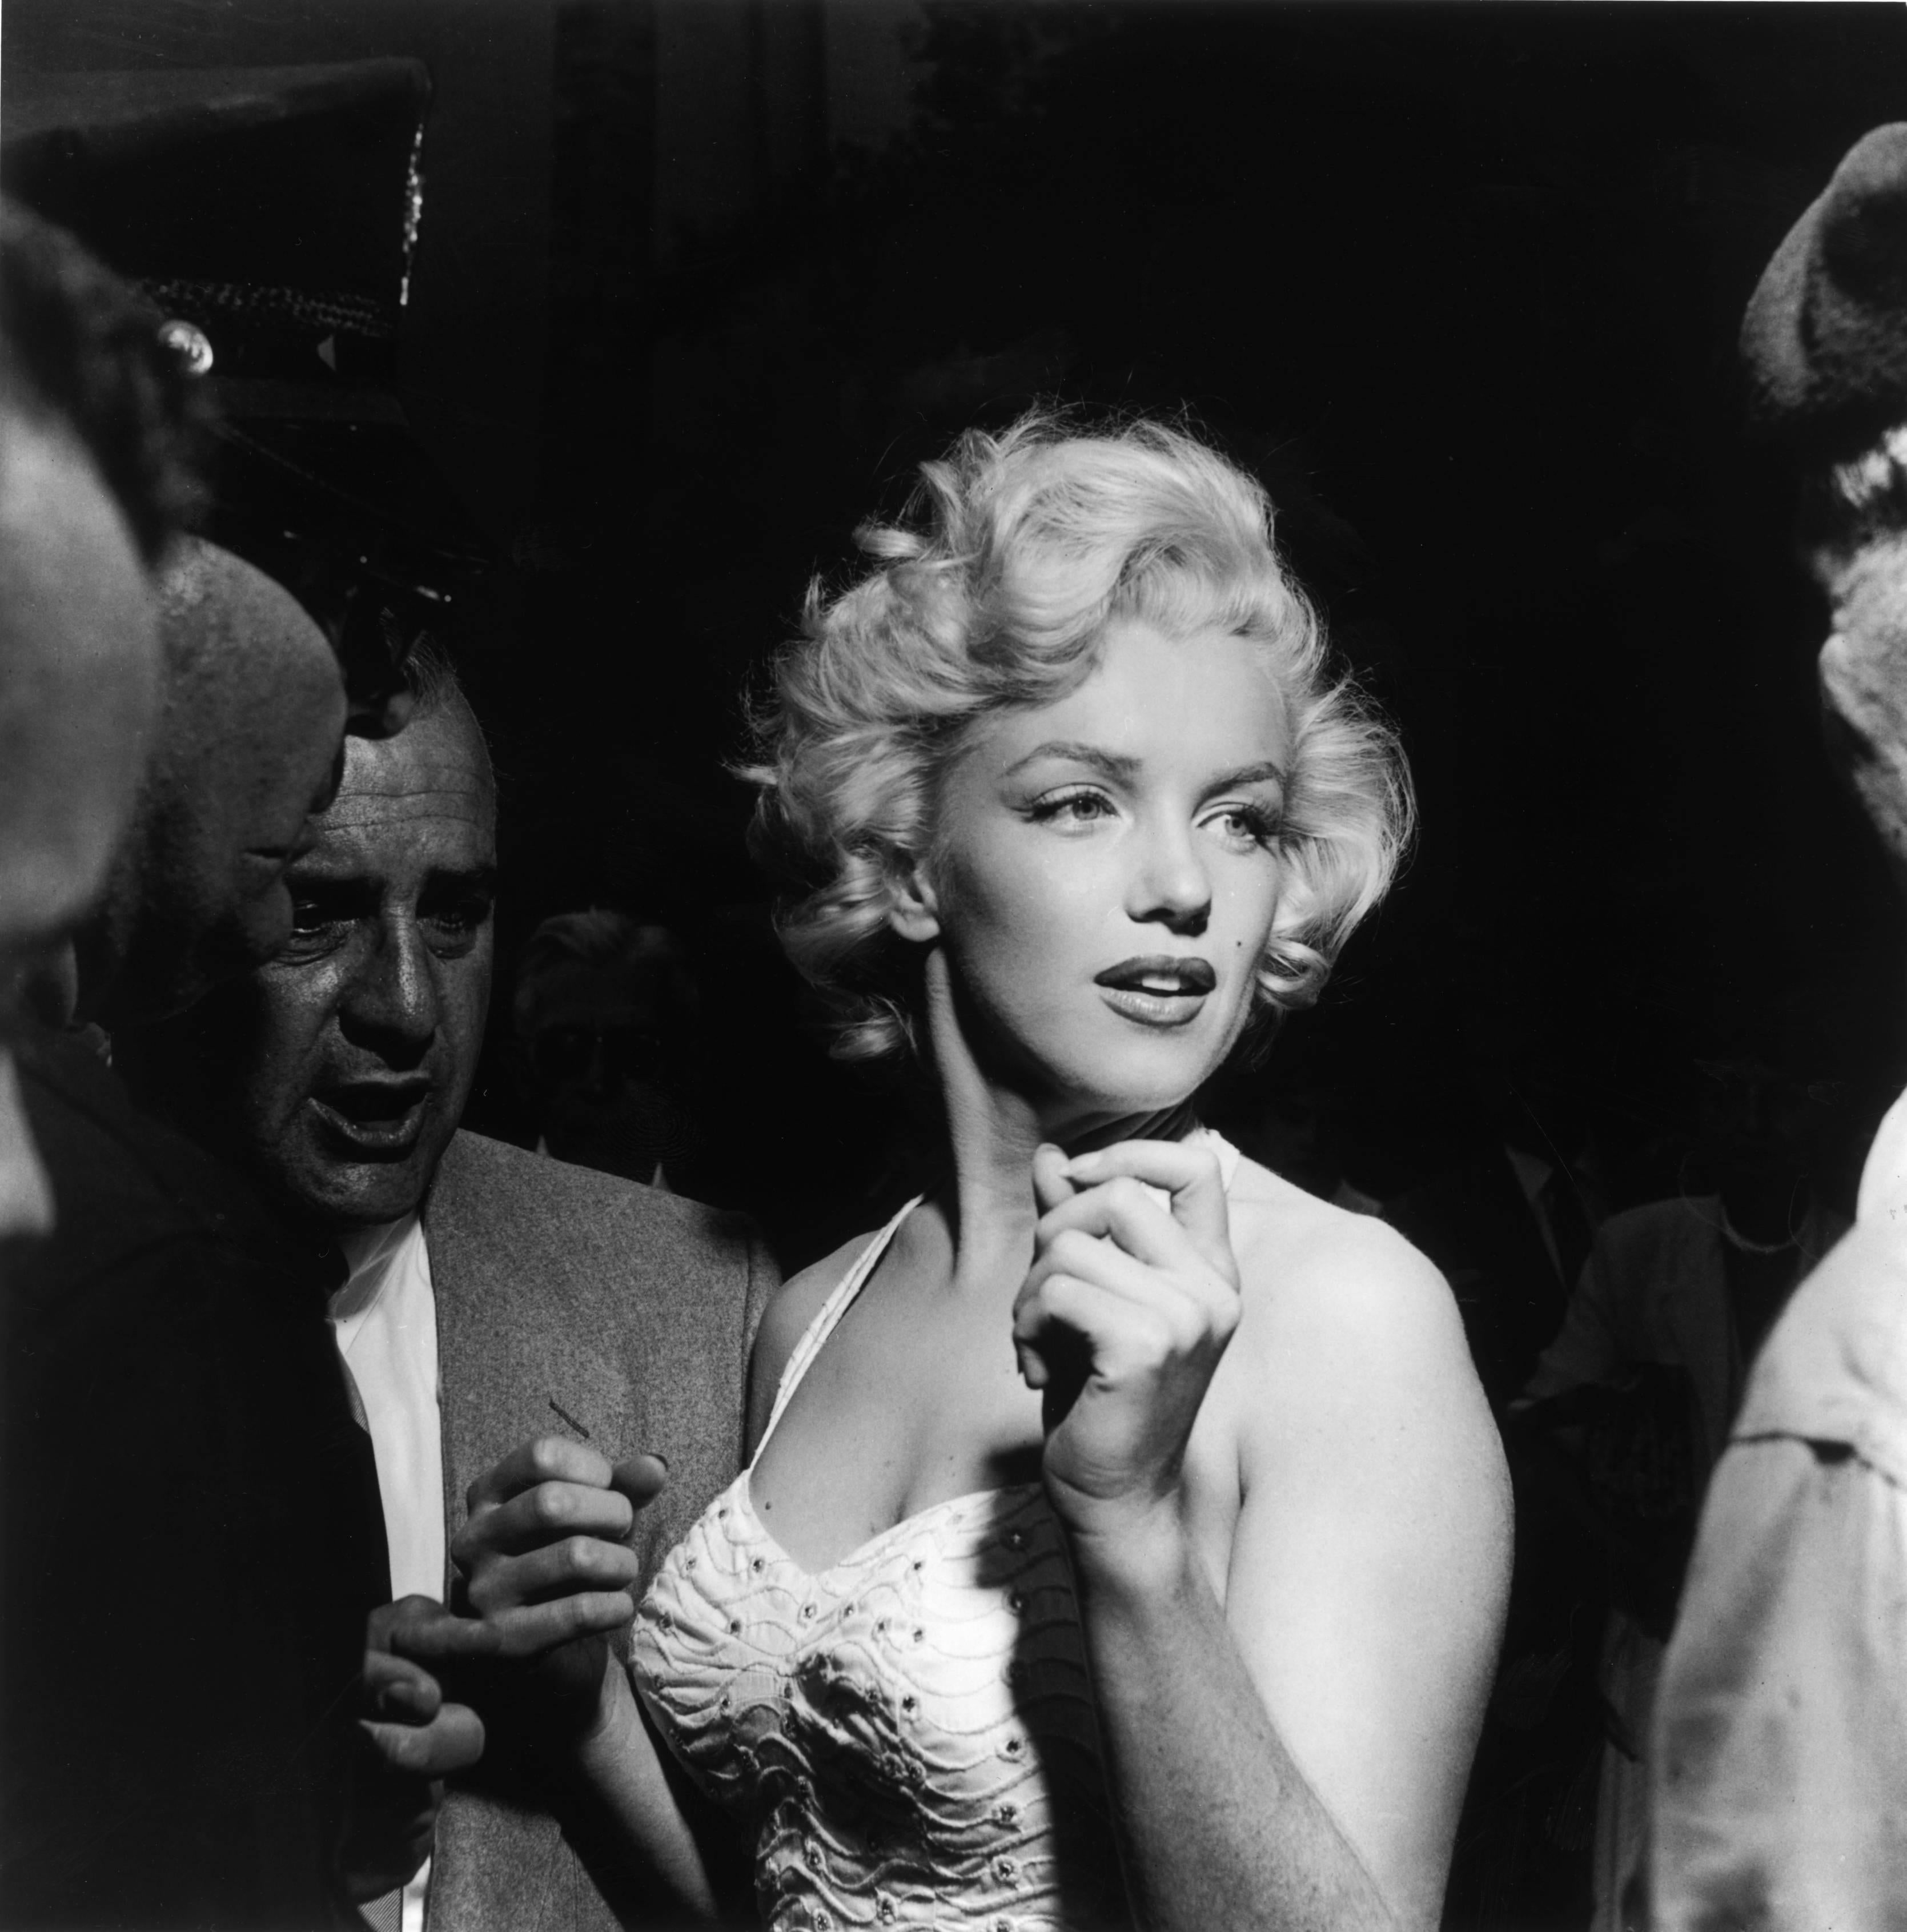 Murray Garrett Portrait Photograph - 'Marilyn Monroe' 1953 - Silver Gelatin Print (Signed Limited Edition)